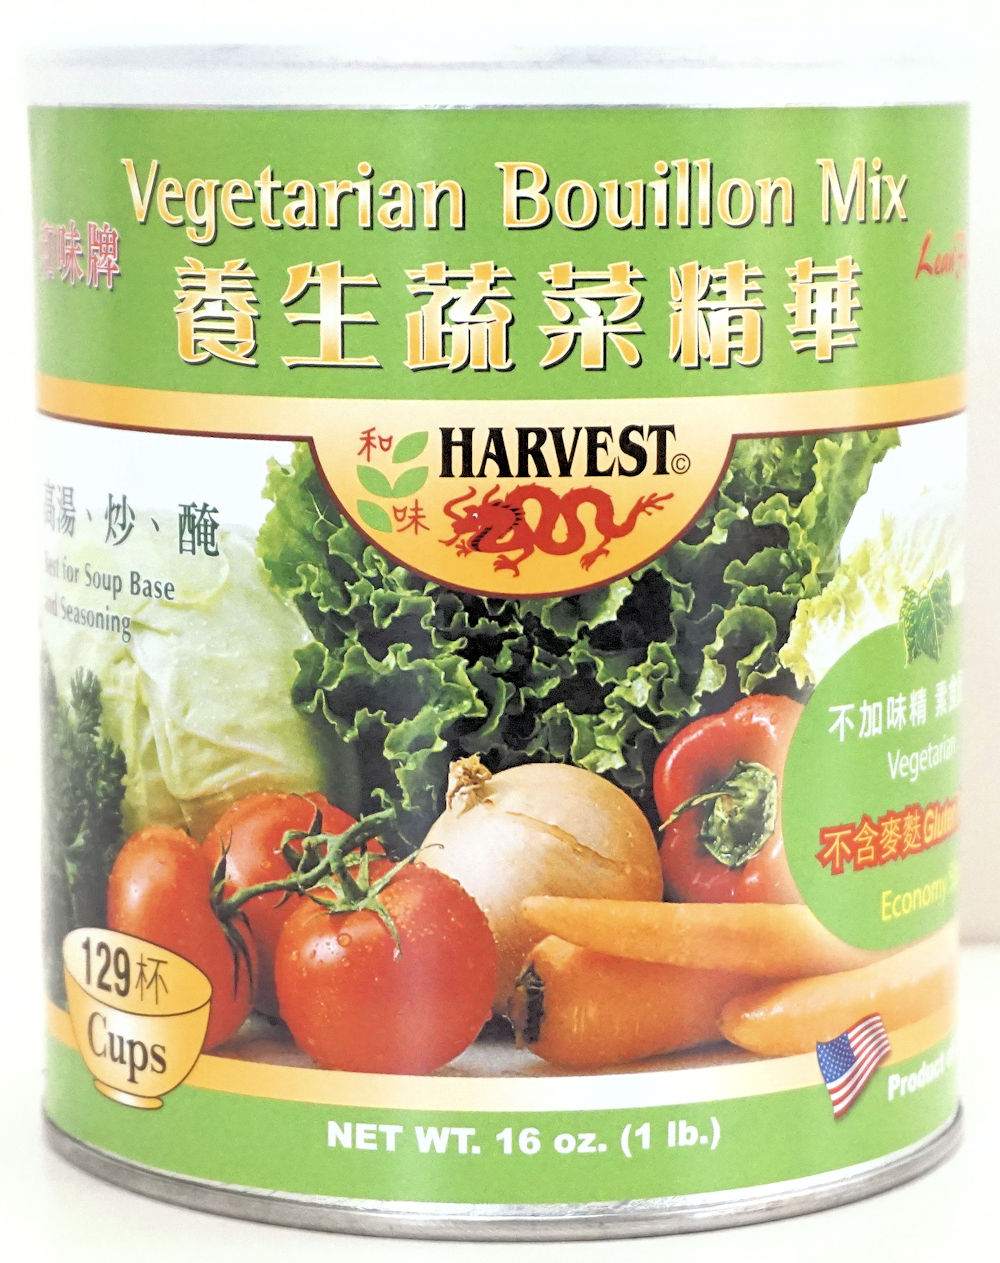 Harvest 2000 Vegetables  Bouillon Mix素食蔬菜调味料 